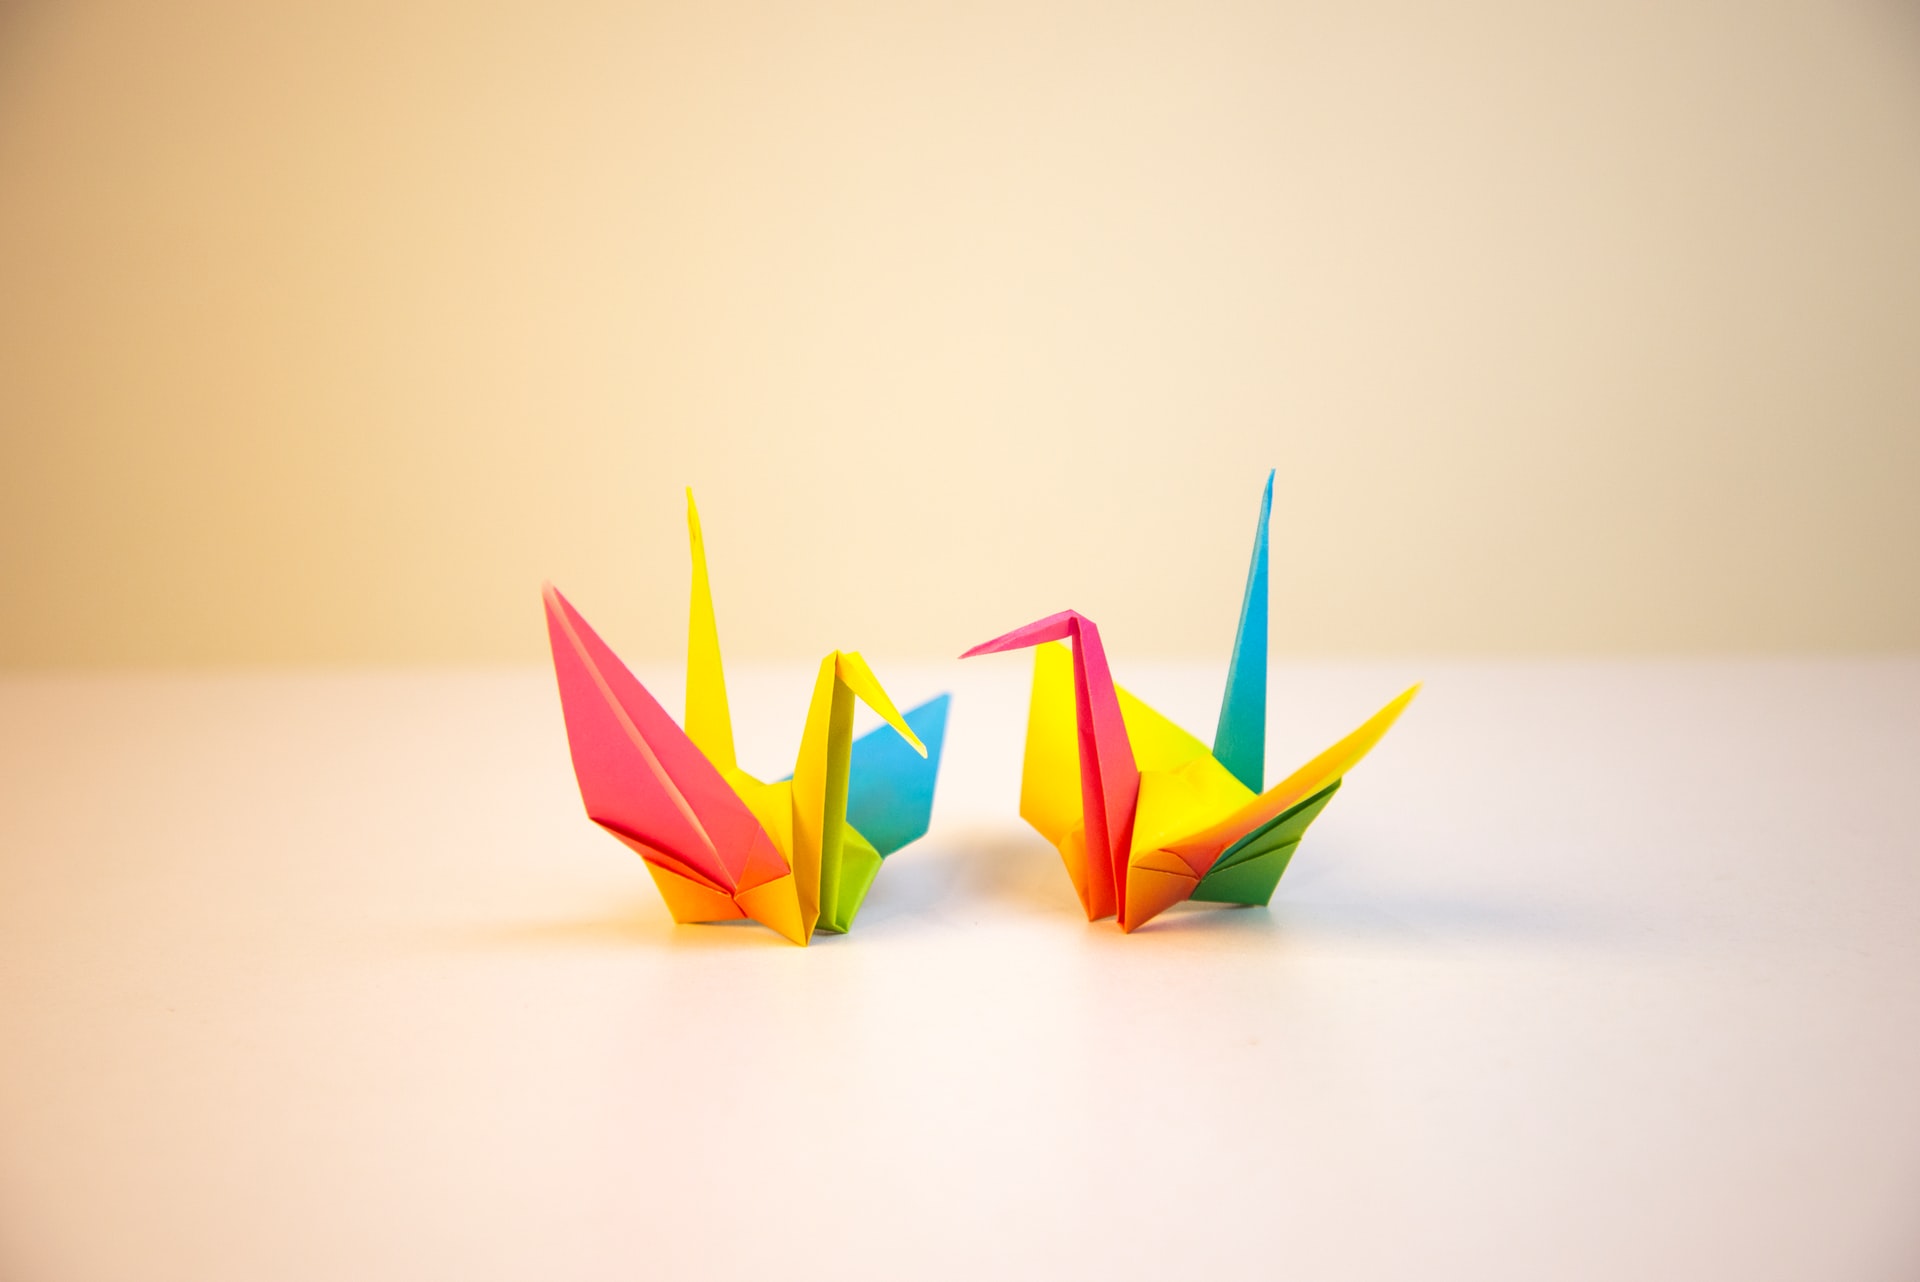 Colorful origami paper cranes